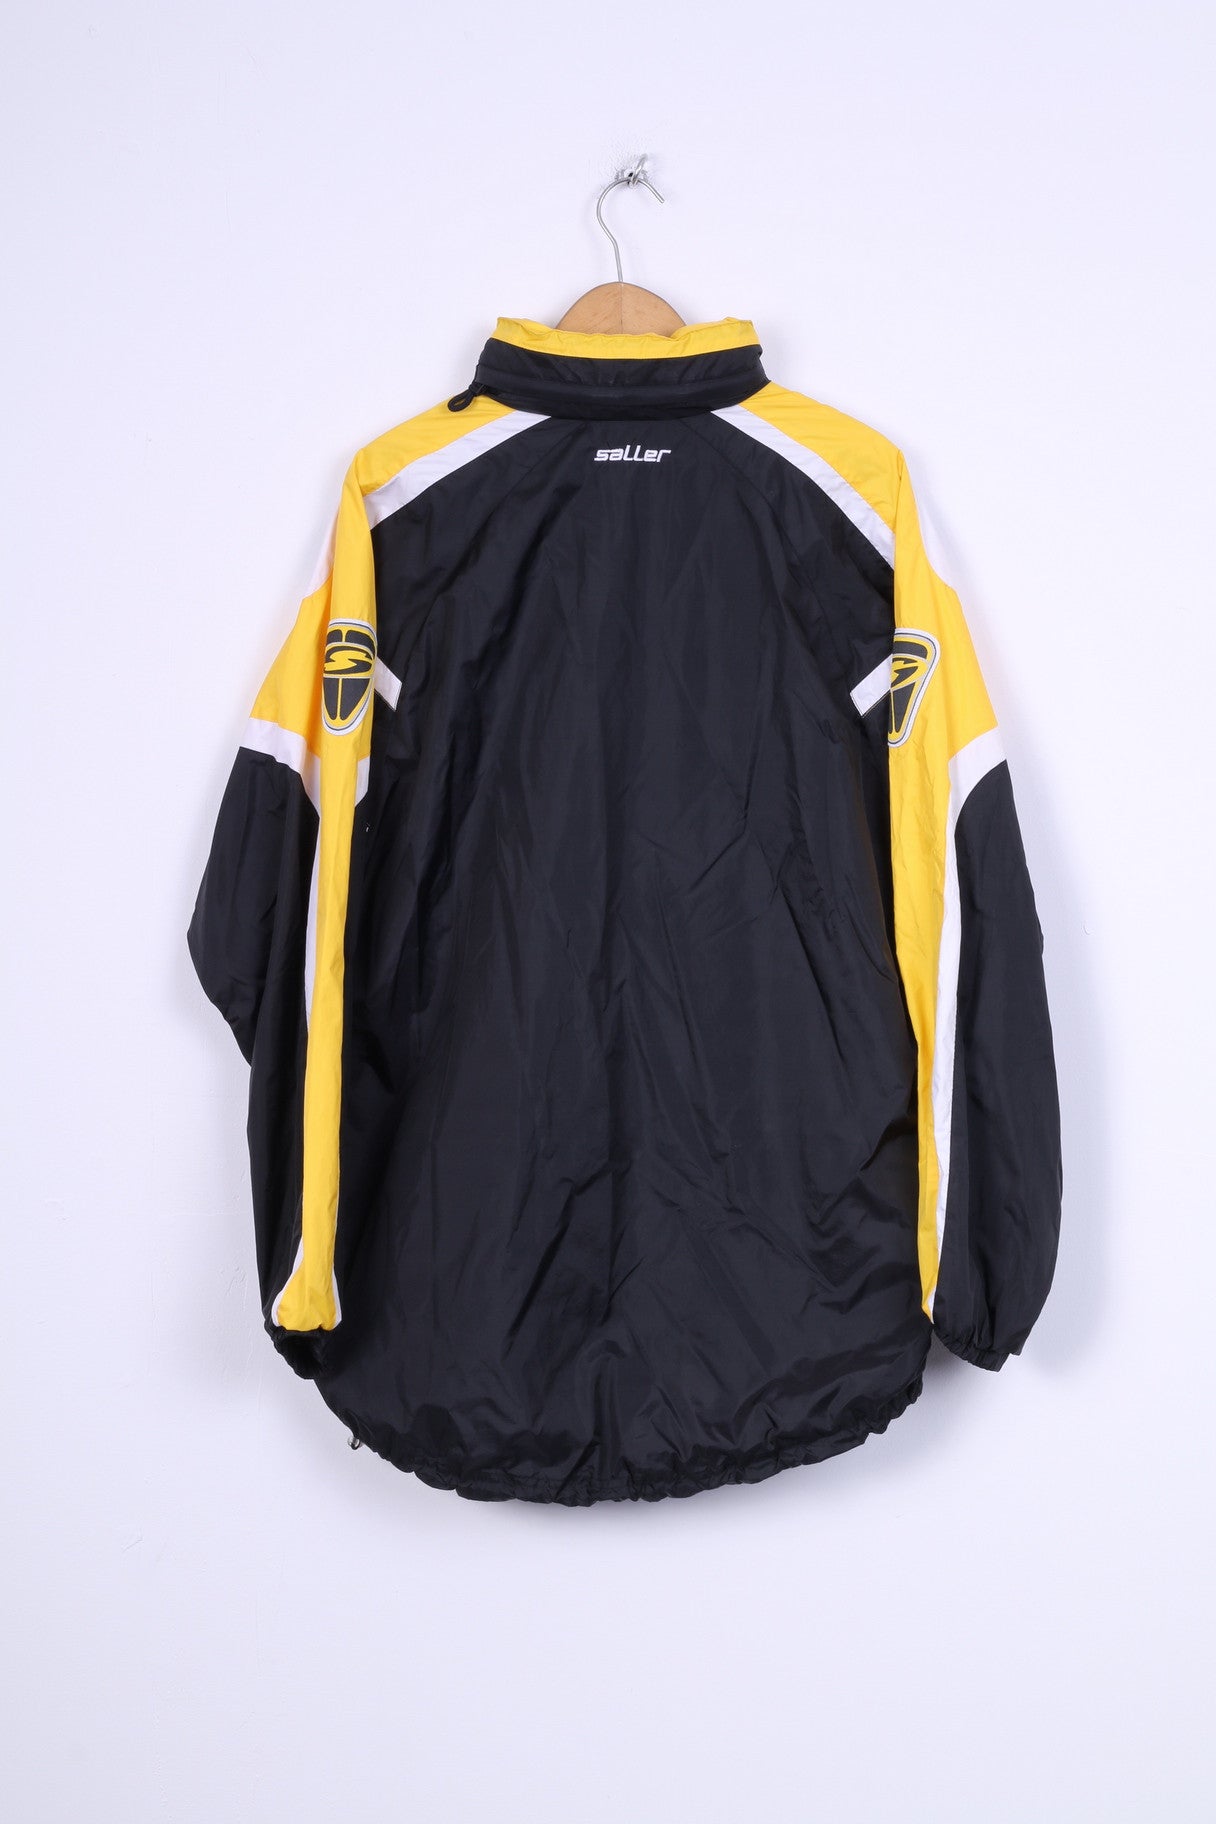 Saller Mens L Jacket Black Nylon Waterproof Hidden Hood Lightweight Training Top